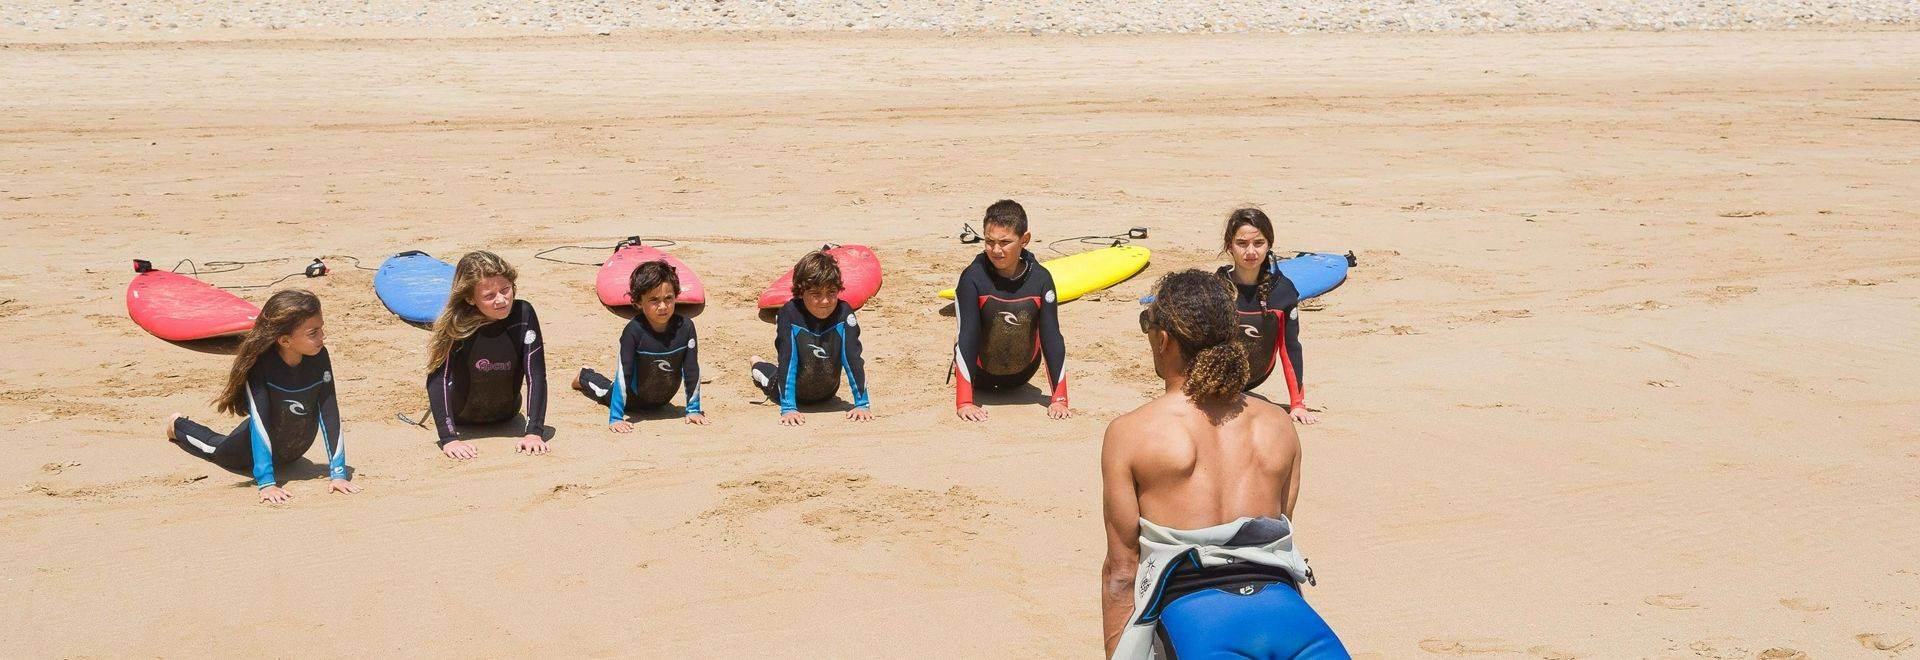 Paradis-Plage-surf-training-kids-2.jpg